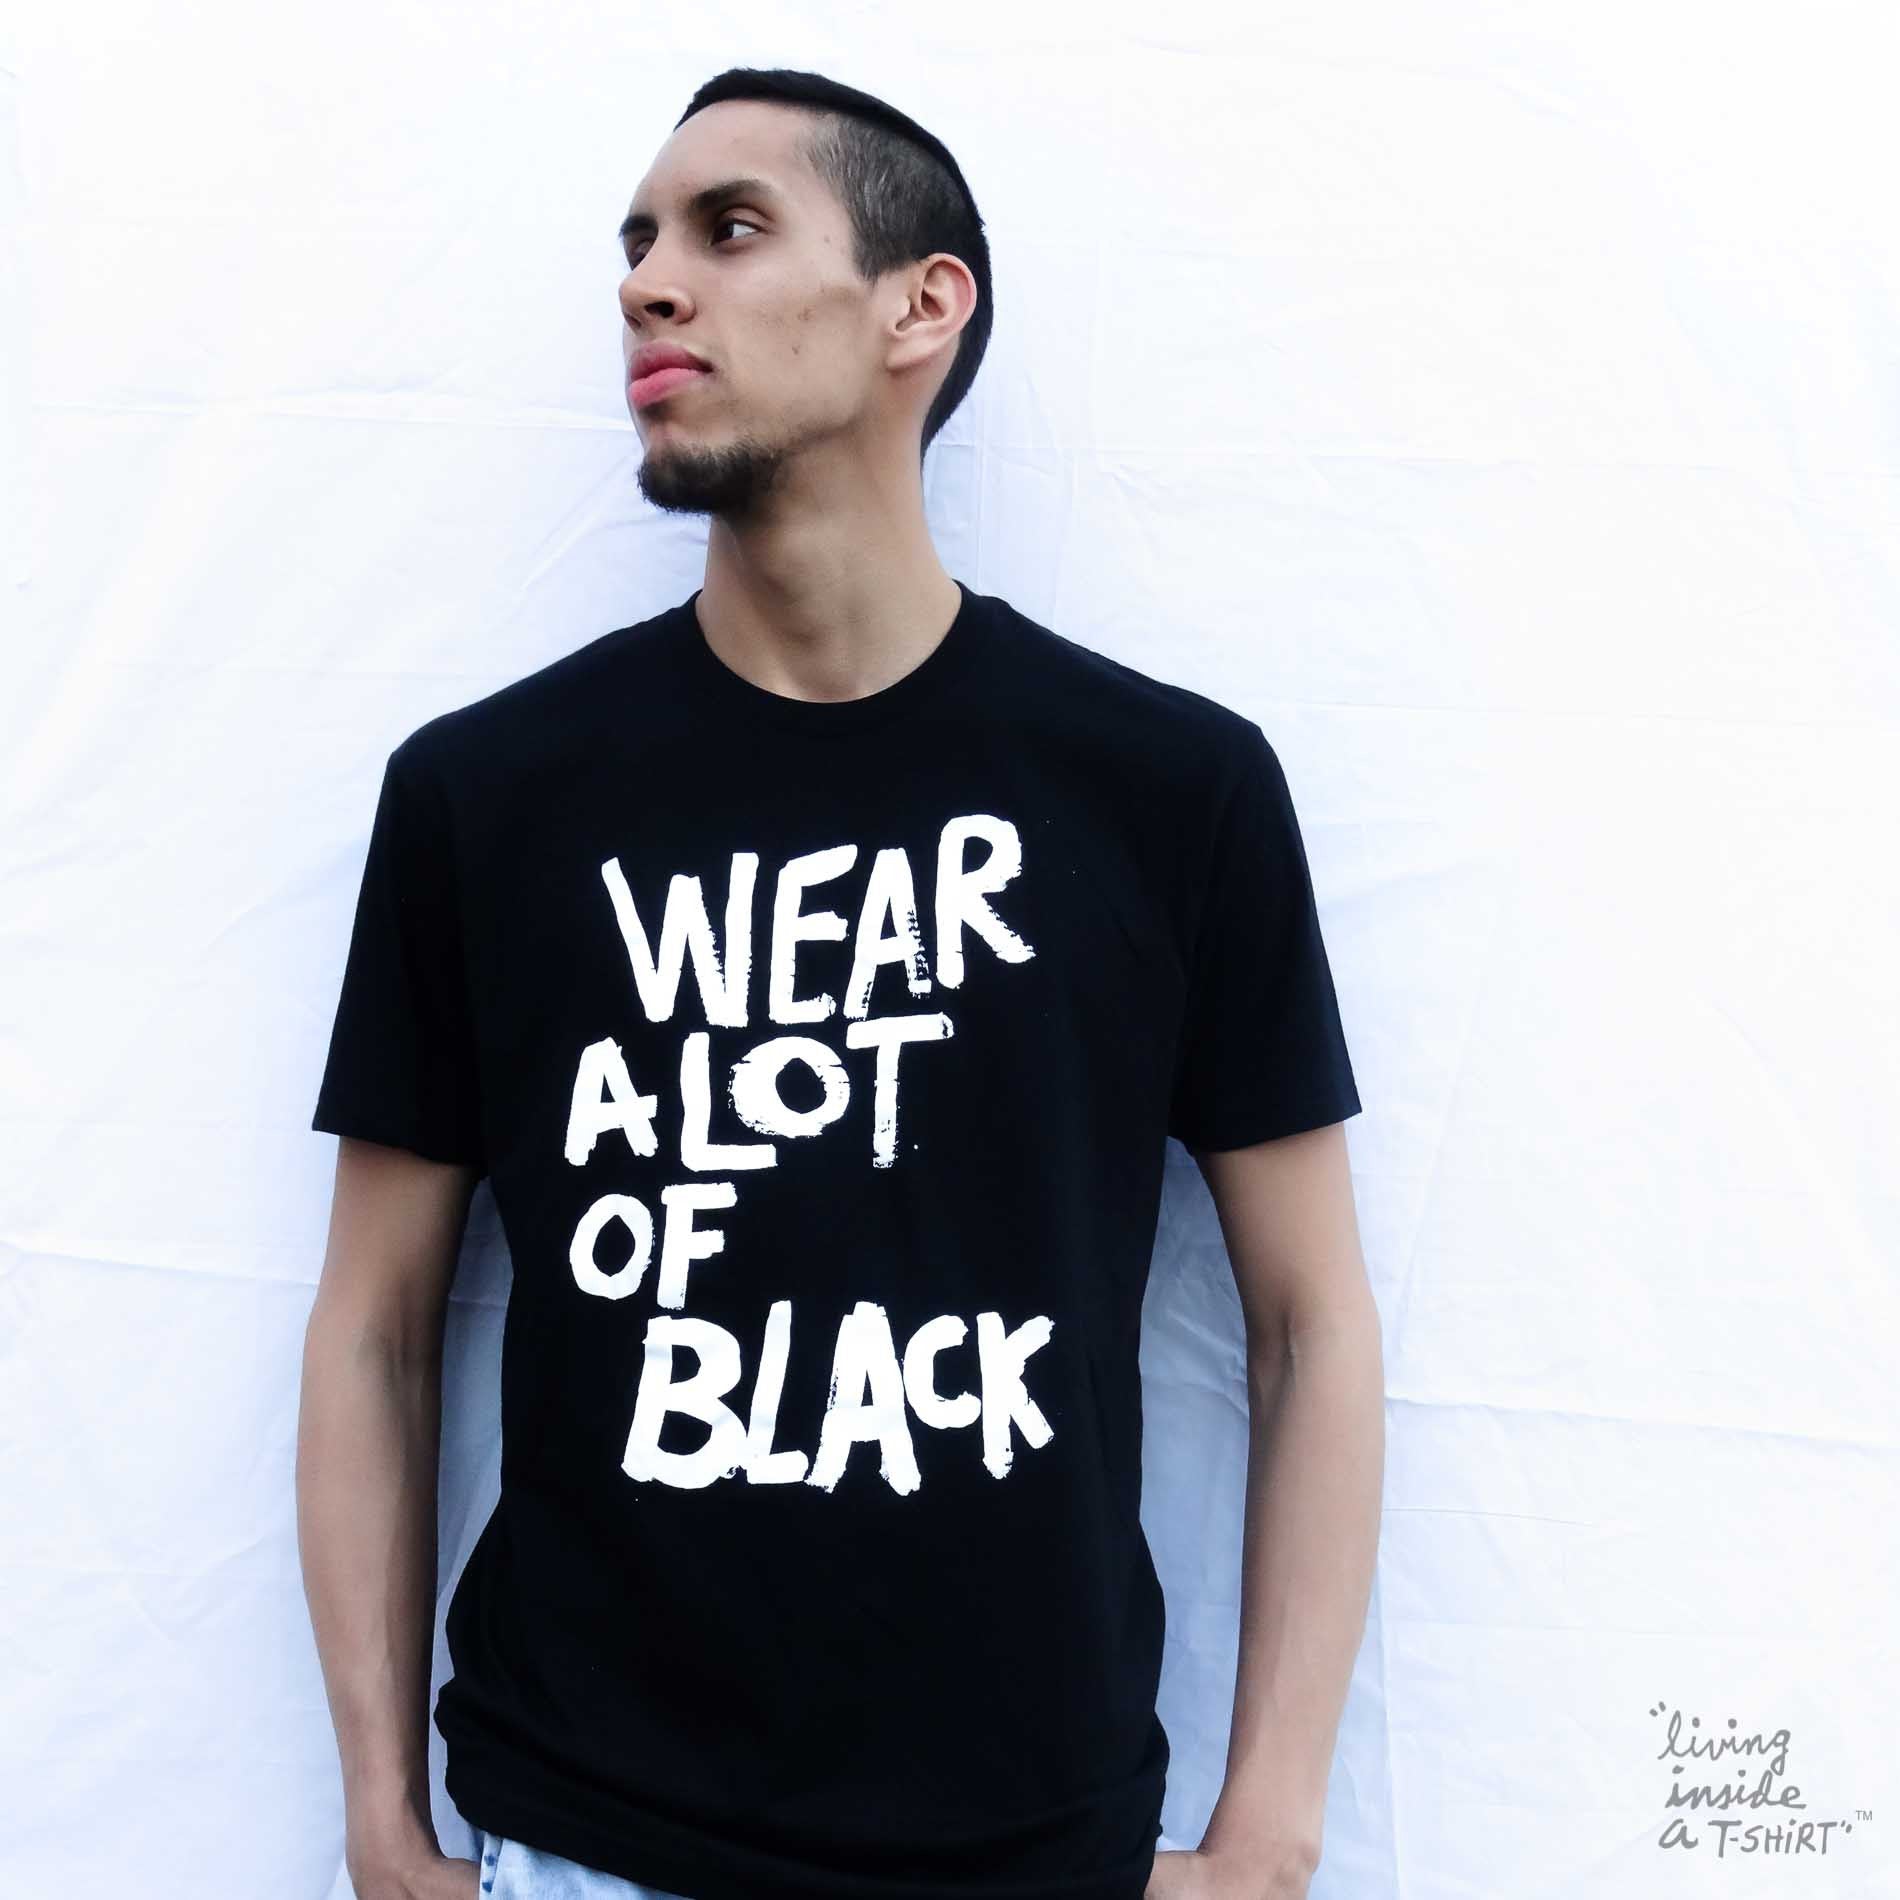 Wear a lot of black - Unisex T-shirt